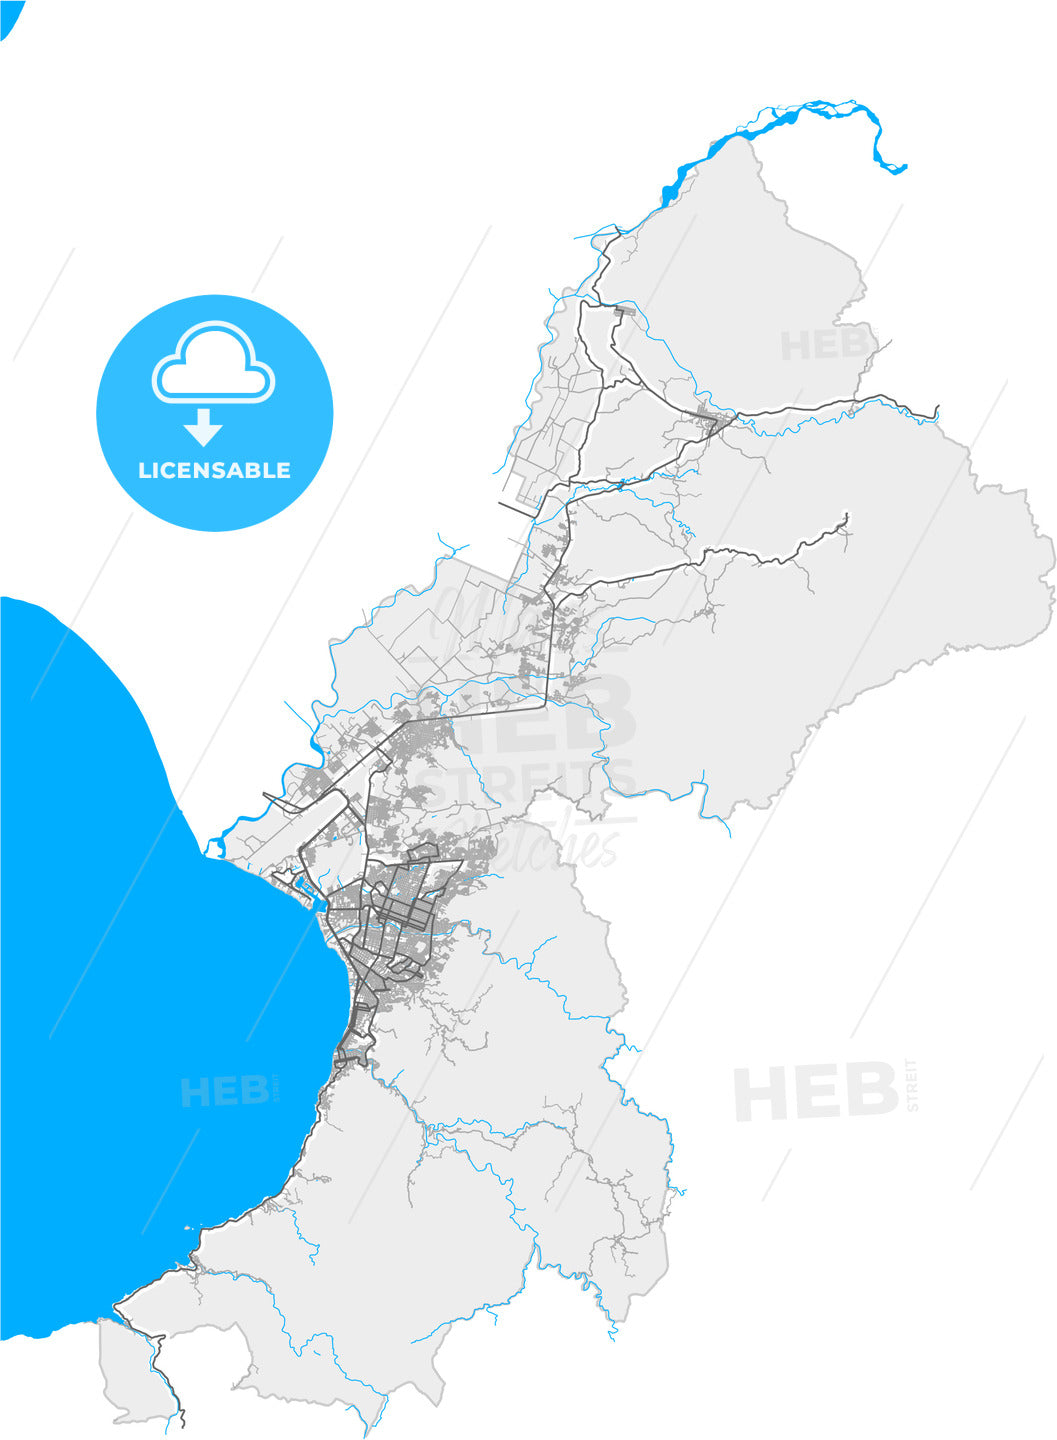 Puerto Vallarta, Jalisco, Mexico, high quality vector map